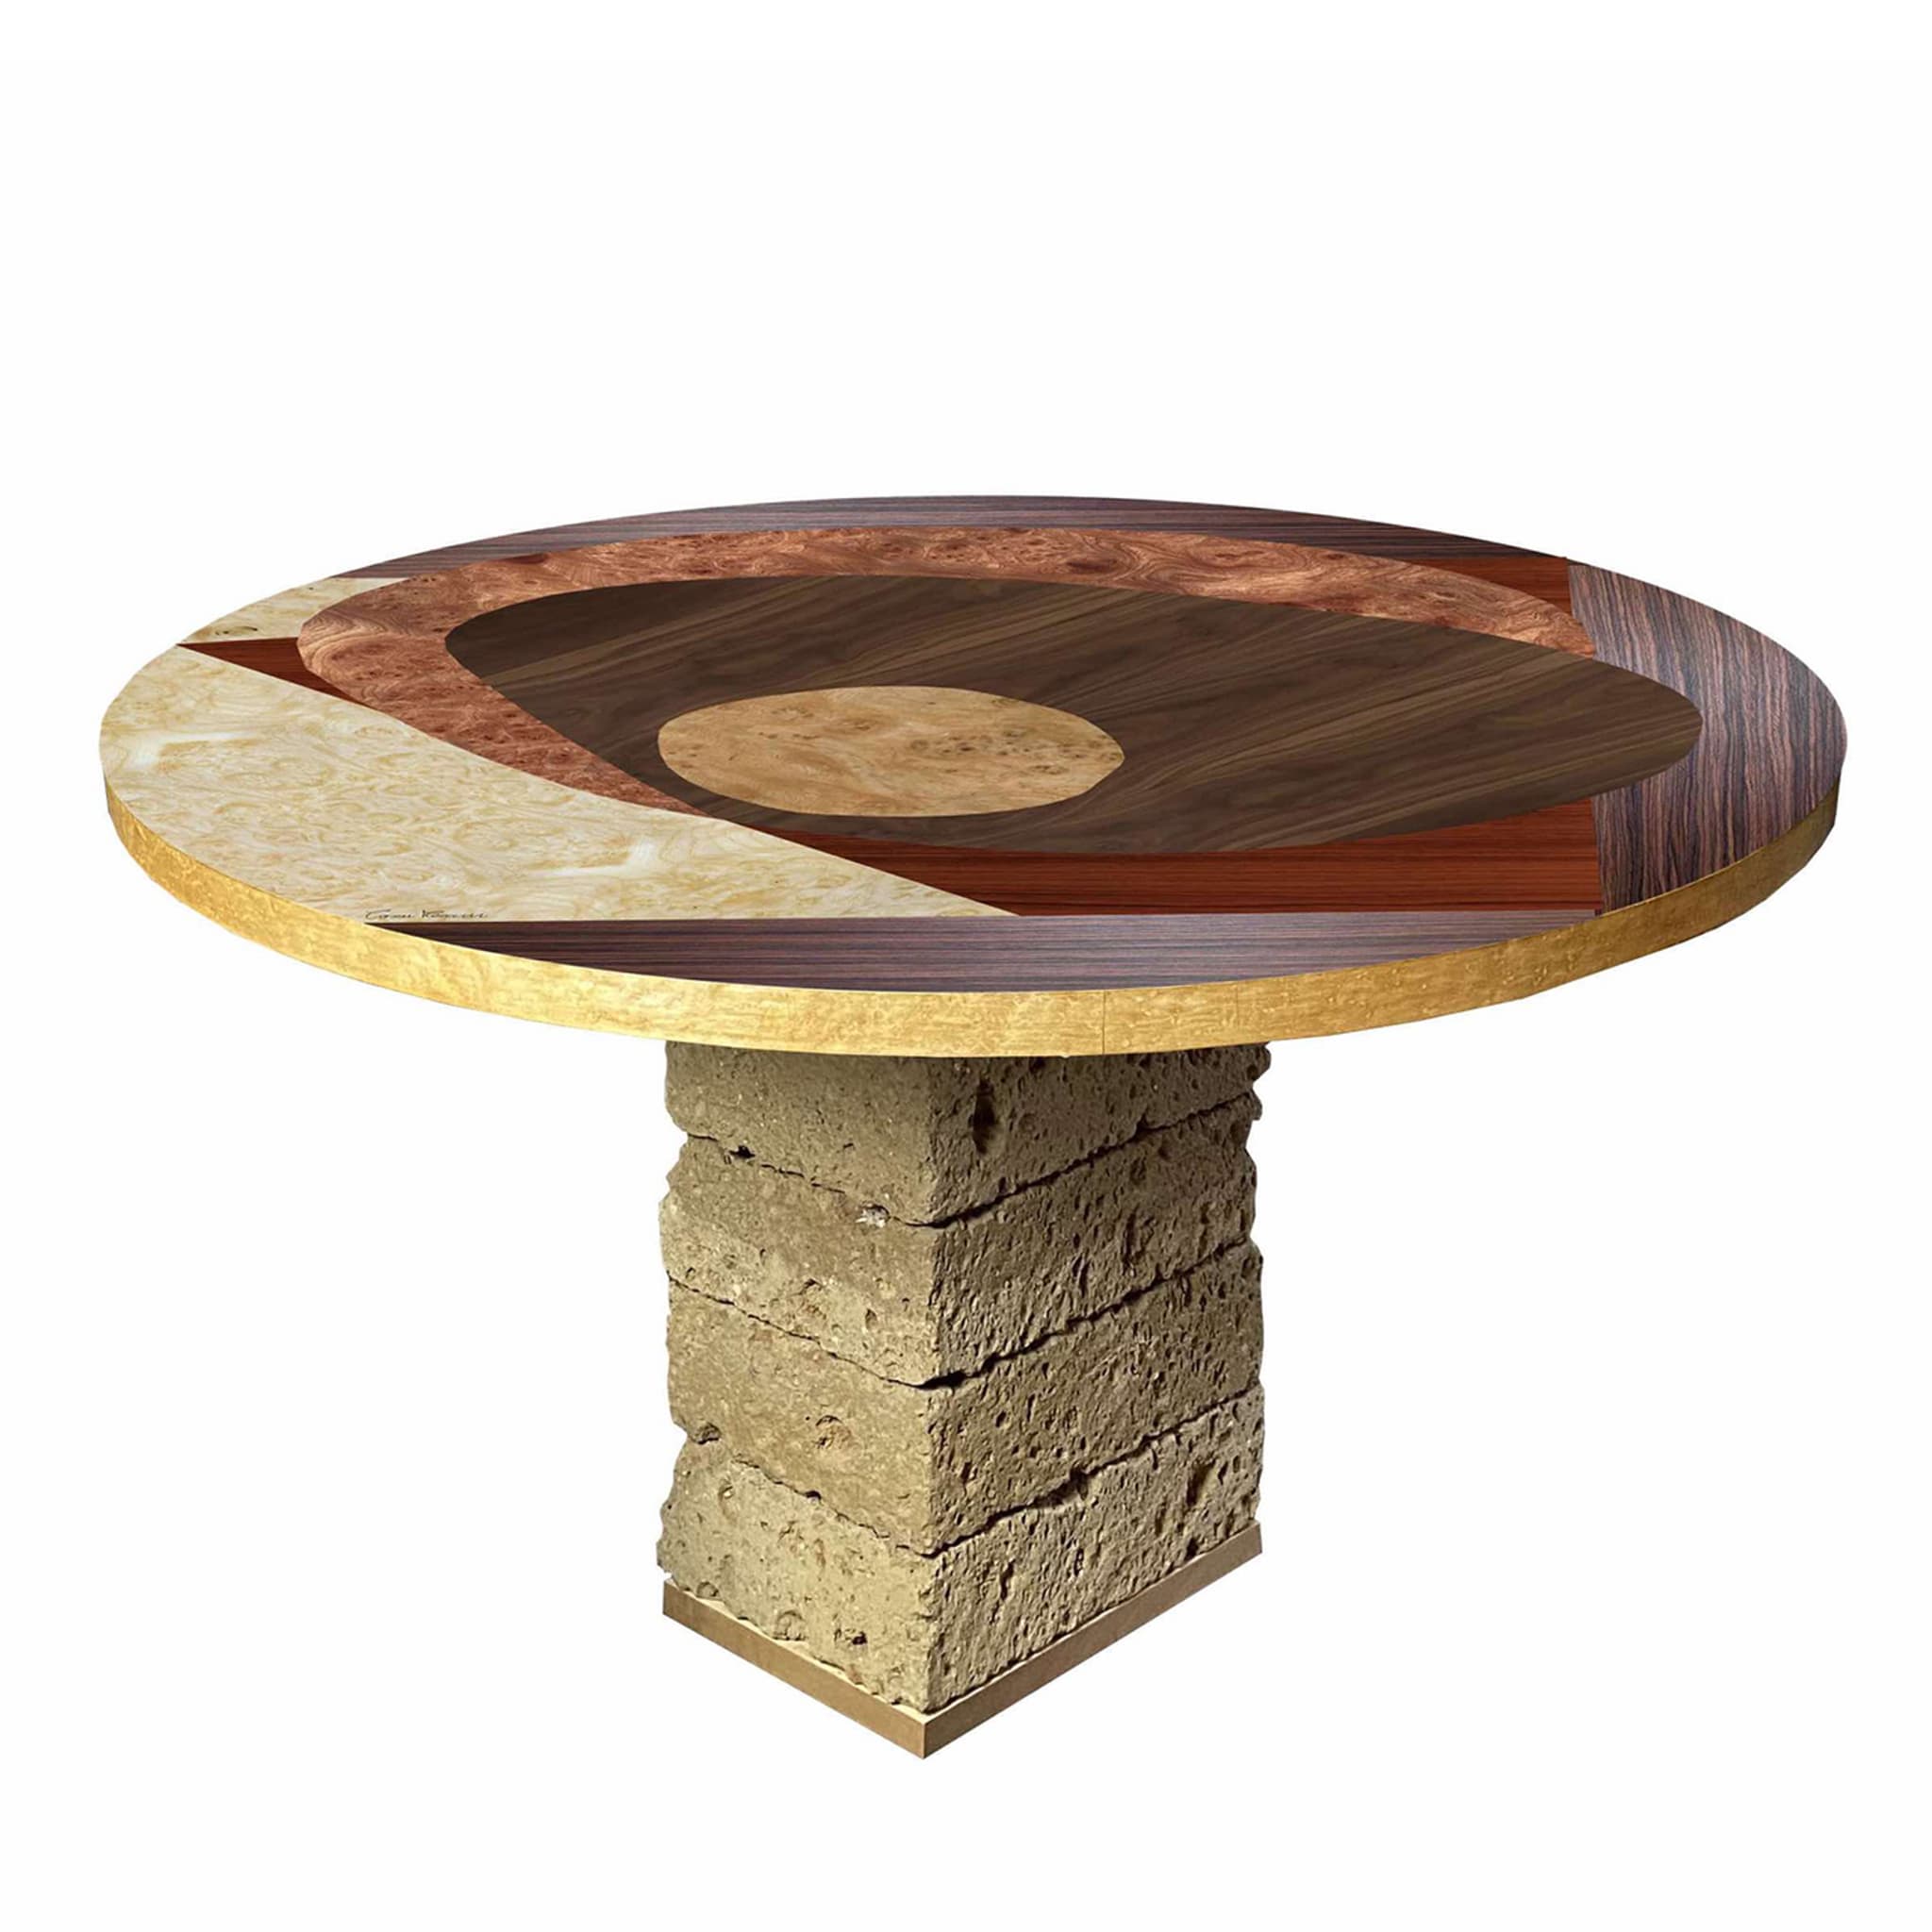 Tarsia Tables Tt5 Round Polychrome Table by Mascia Meccani - Main view